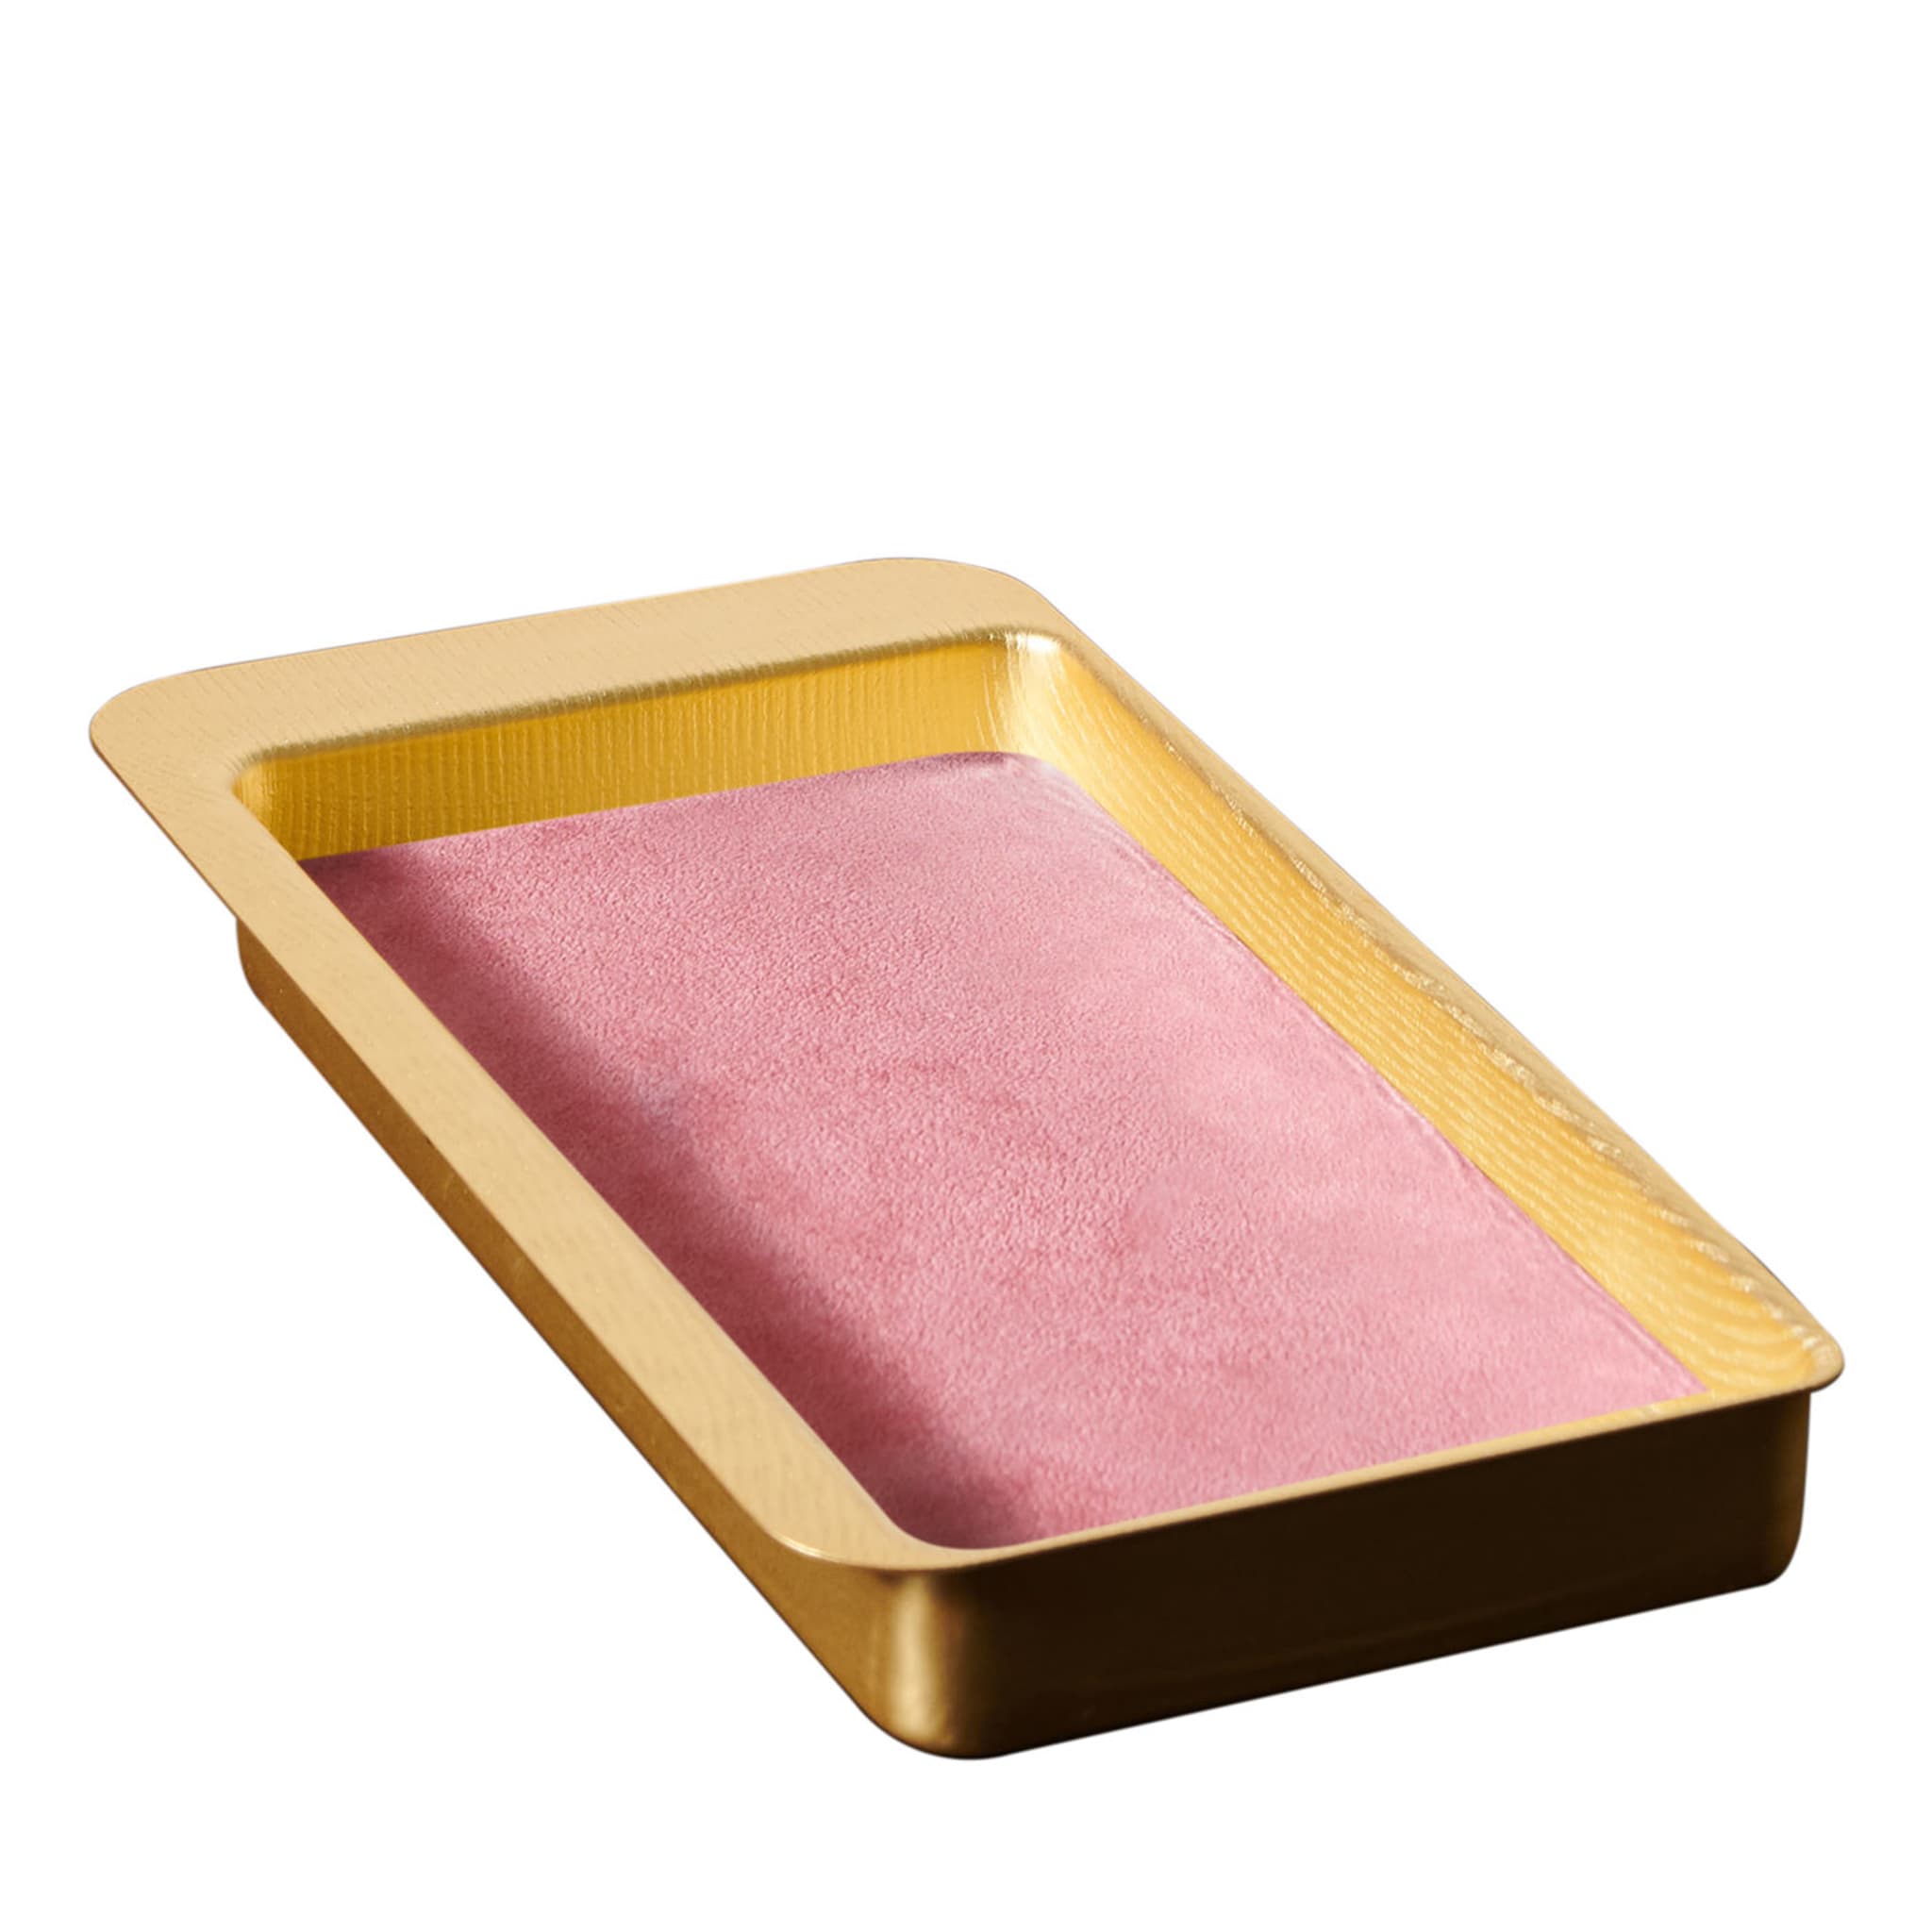 Firenze Bandeja rectangular de bolsillo vacía dorada y rosa - Vista principal